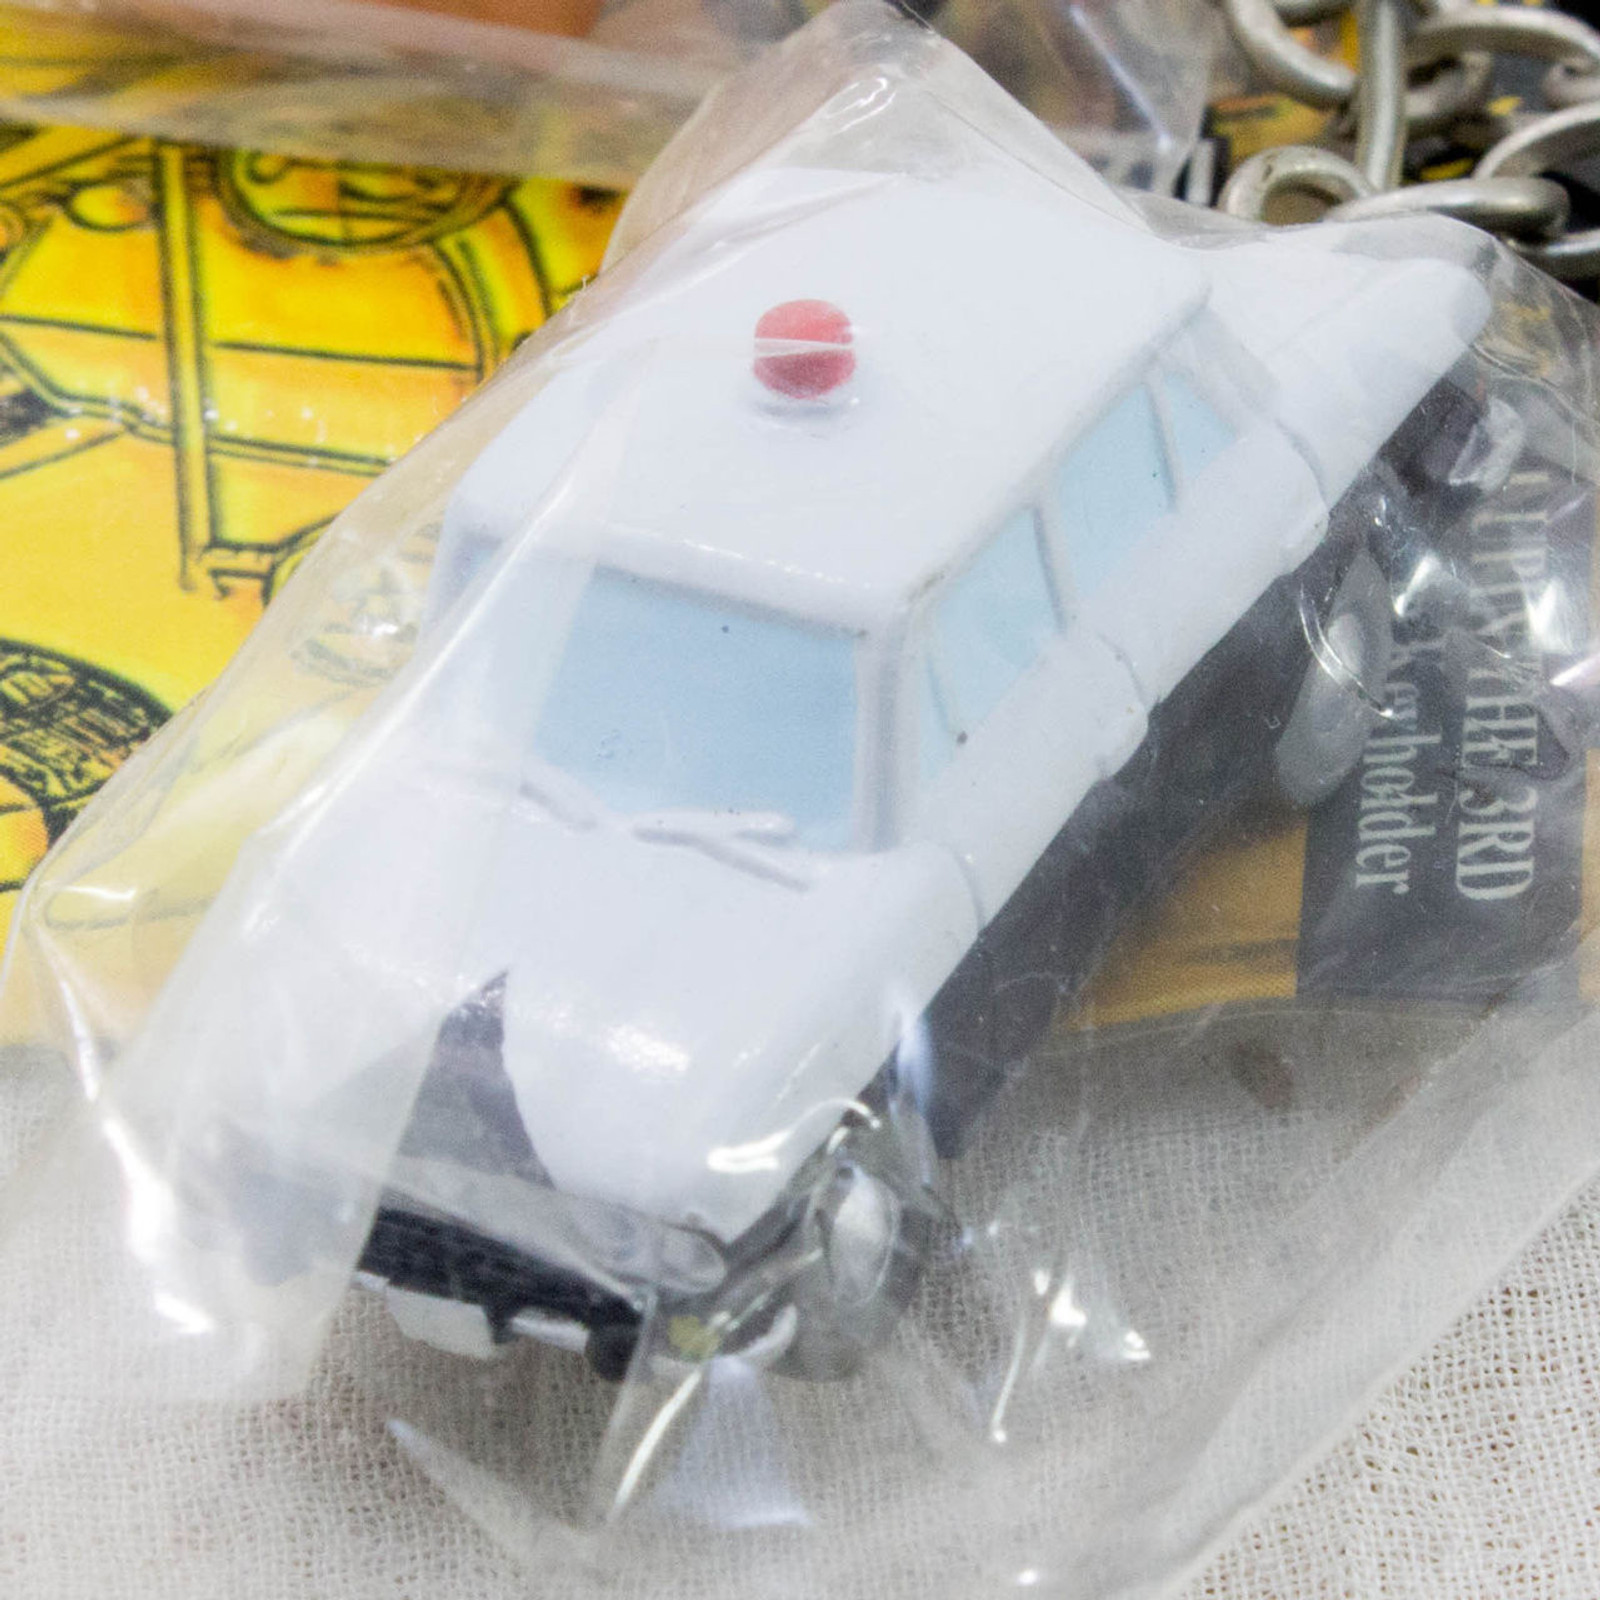 Lupin the Third (3rd) Zenigata & Police Car Figure Keychain JAPAN ANIME MANGA